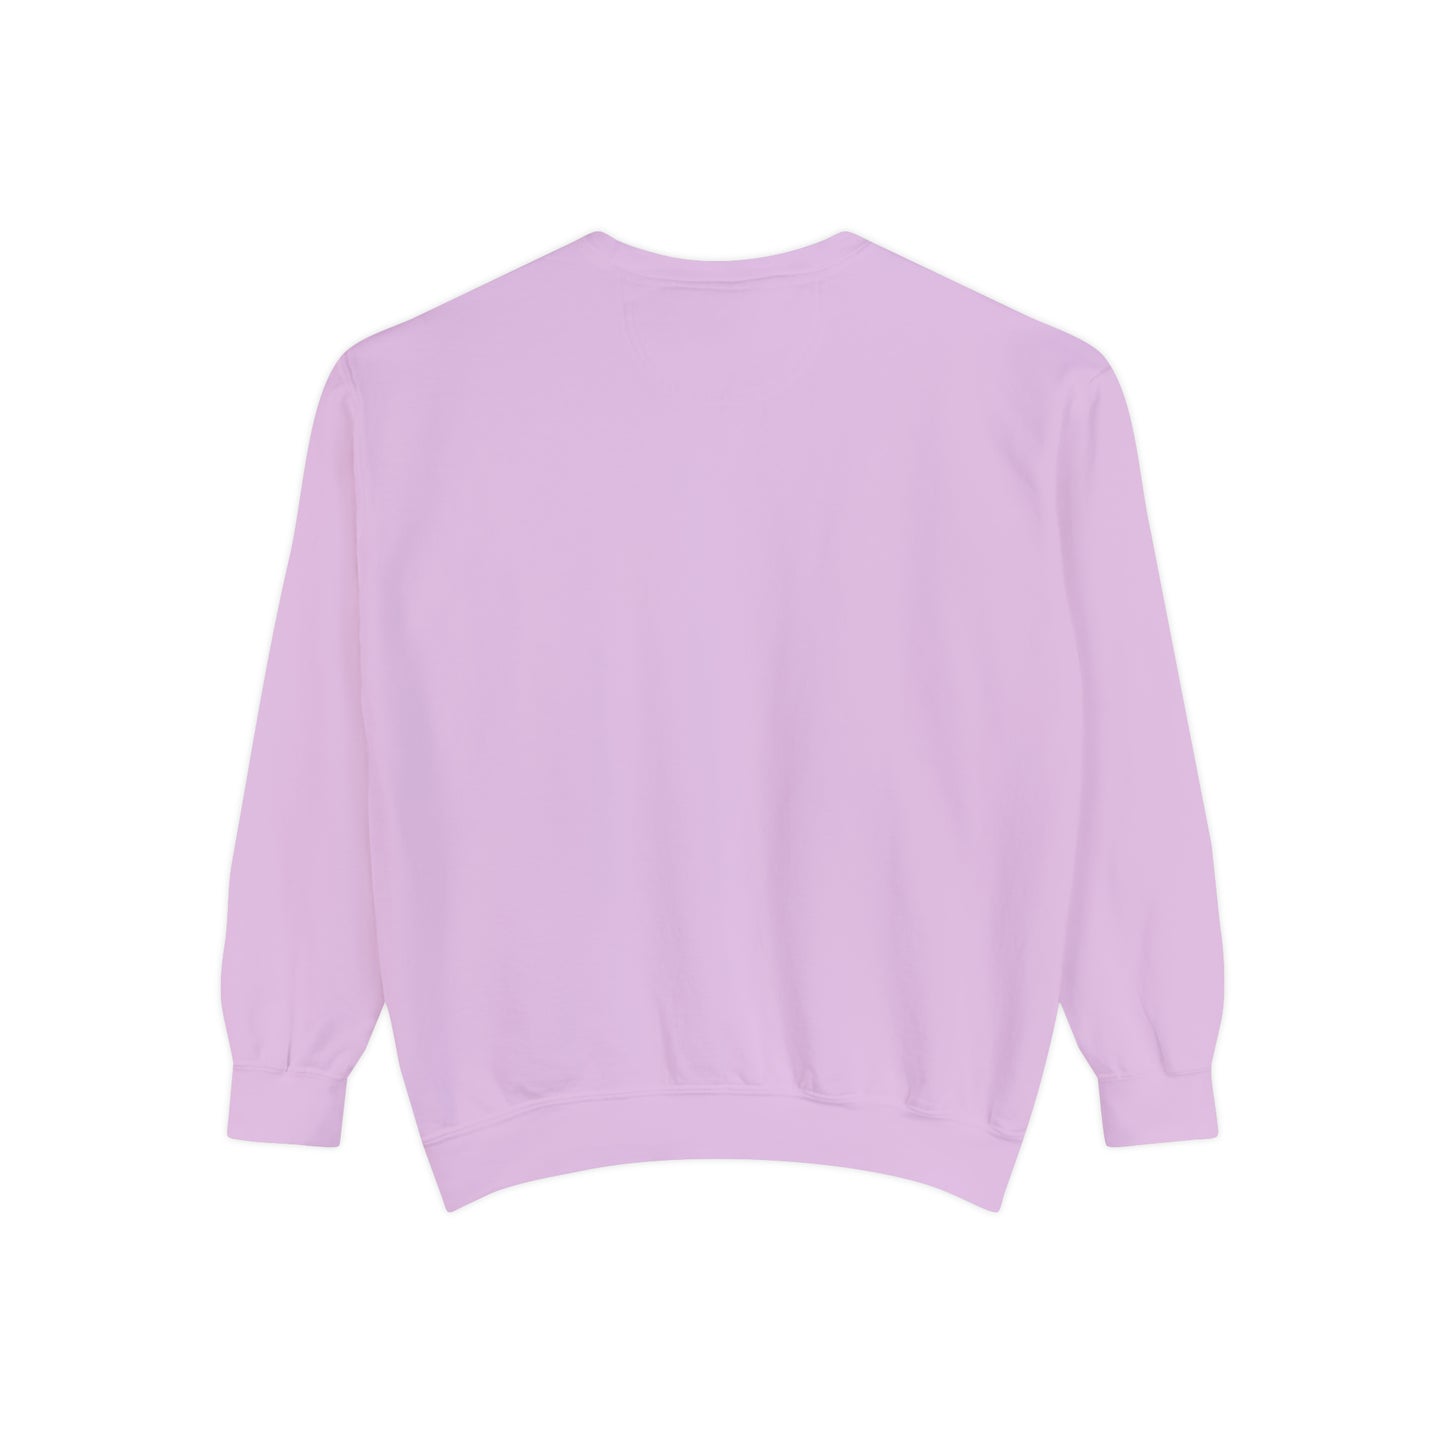 No Mercy Pickleball Series - Unisex Garment-Dyed Sweatshirt